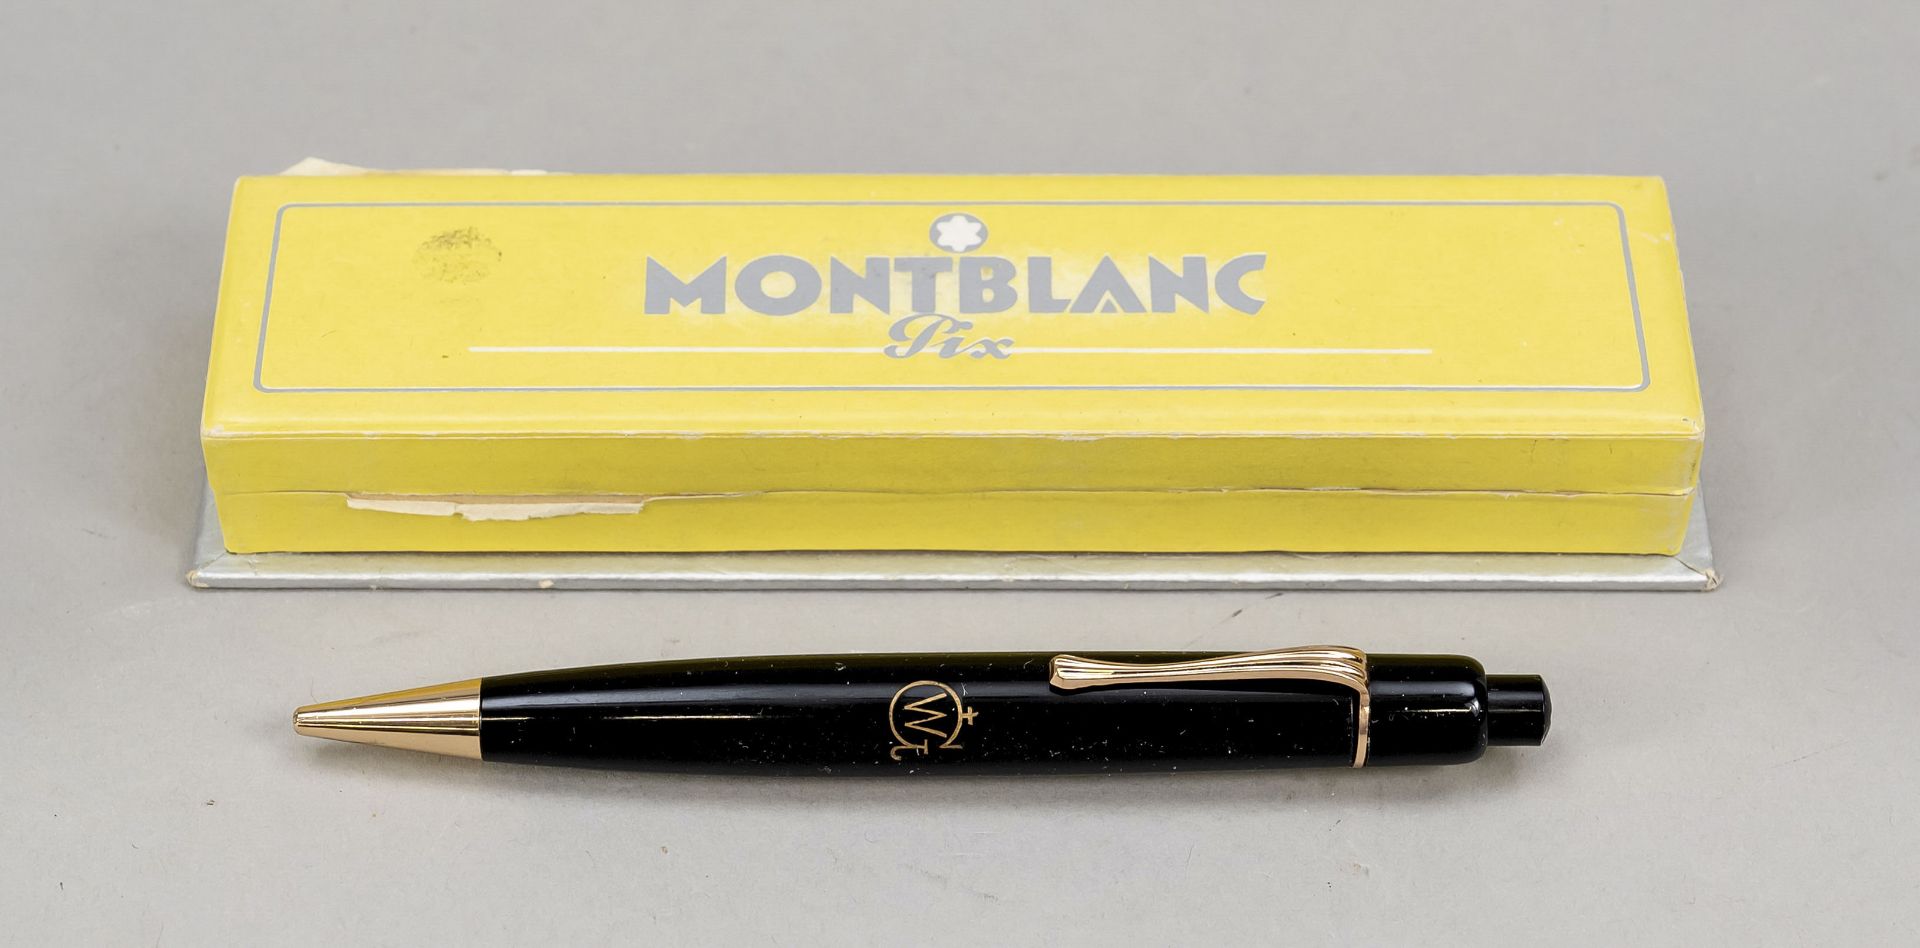 Montblanc Pix mechanical pencil, 2nd half of 20th c., black case, gilded applications, monogram,